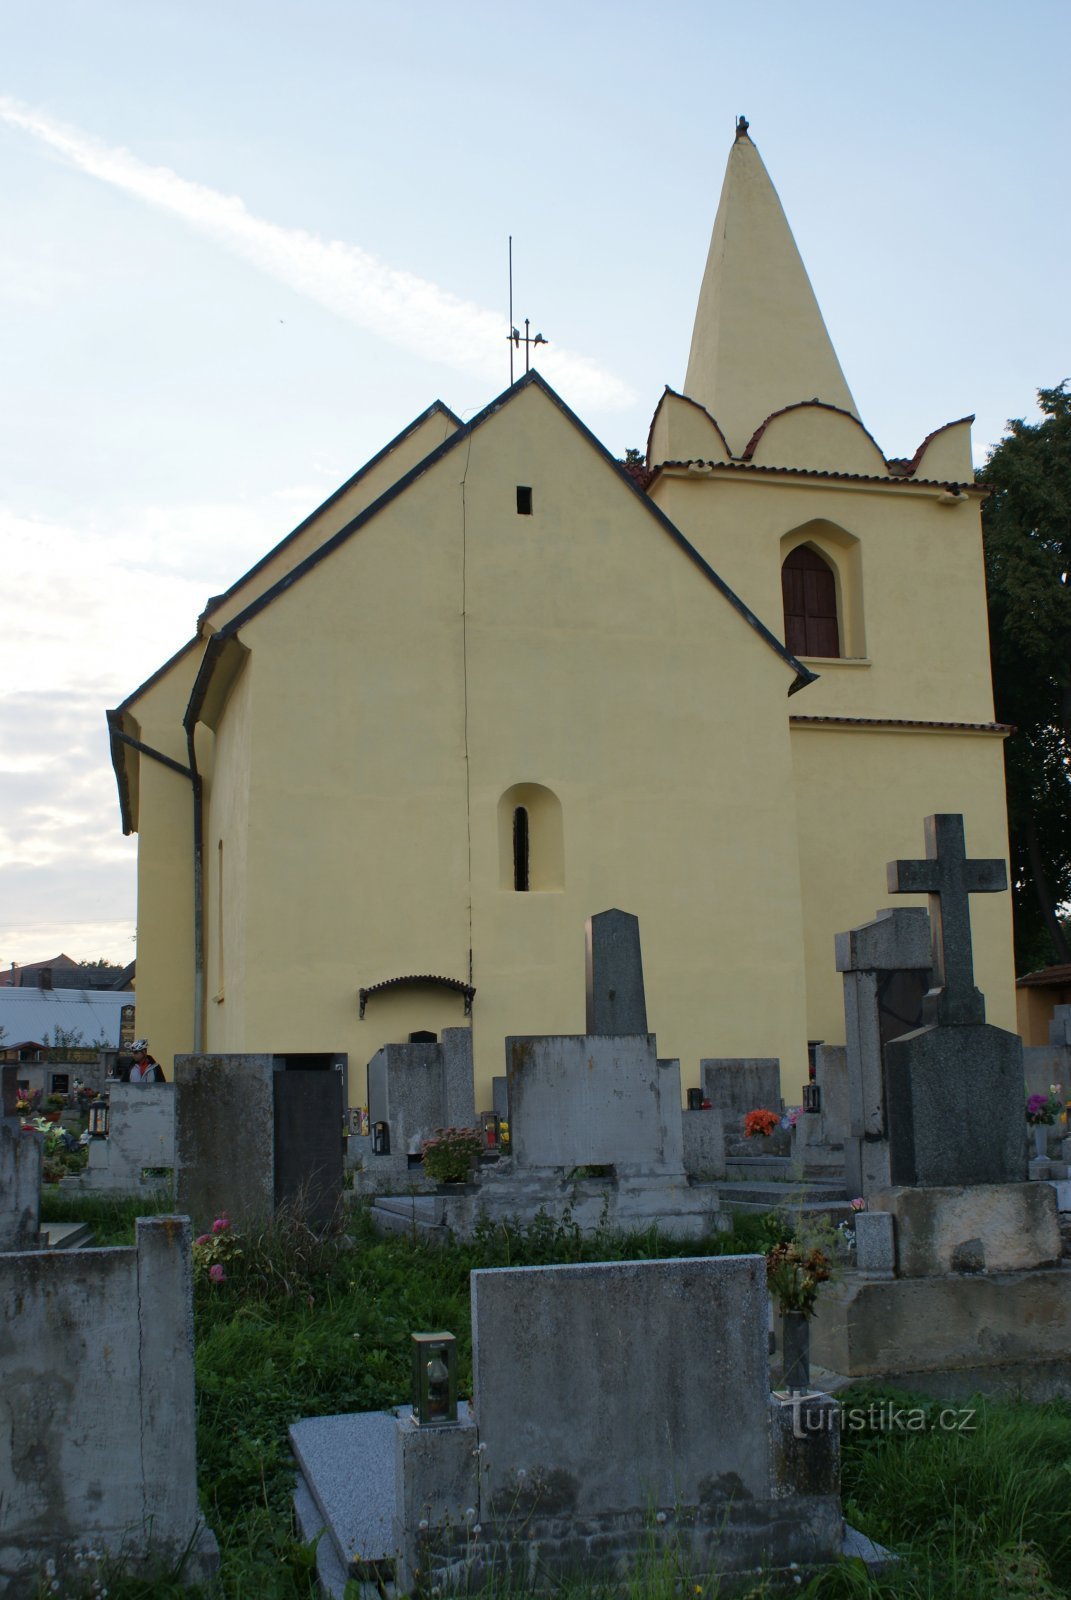 Okresaneč - kerk van St. Bartholomeus